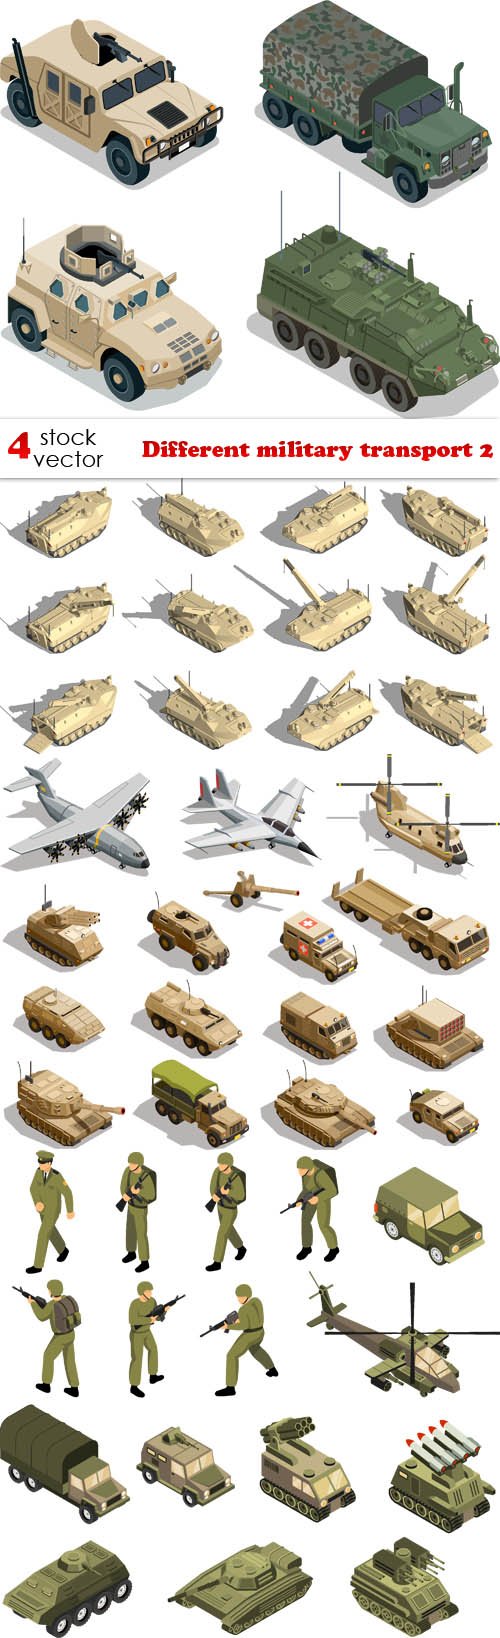 Vectors - Different military transport 2